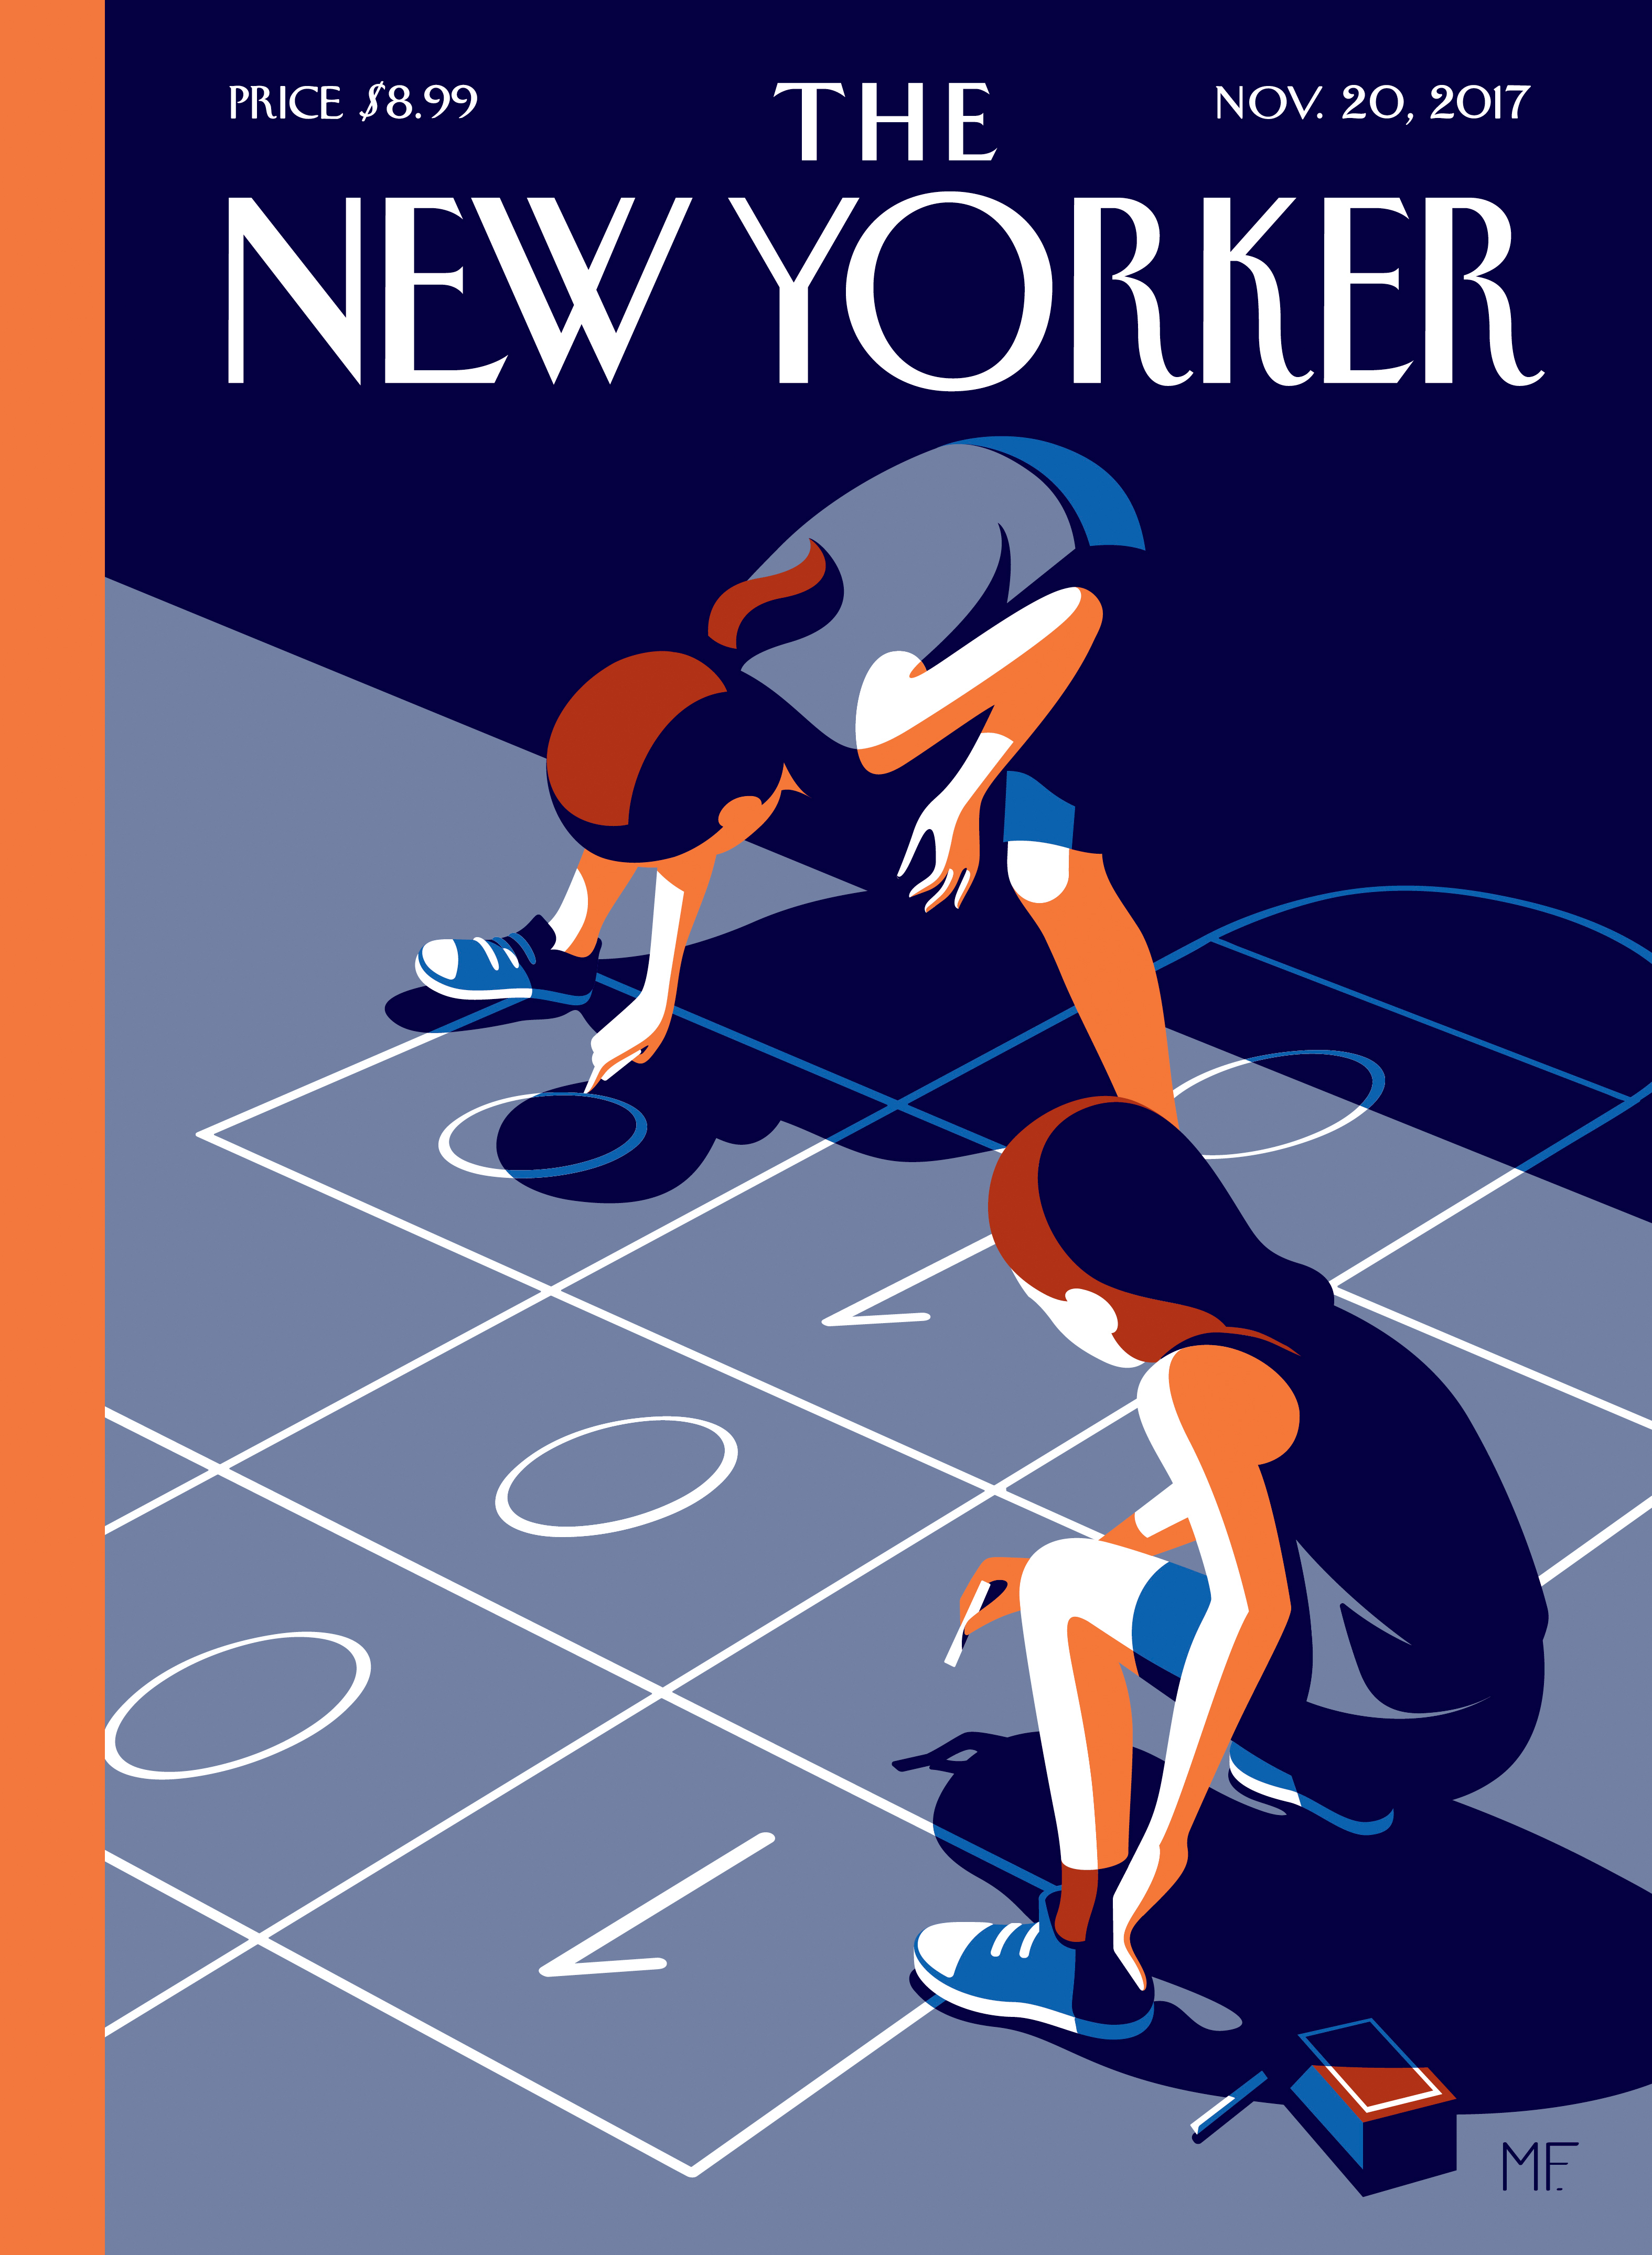 The New Yorker - “Coding 101,” November 20, 2017